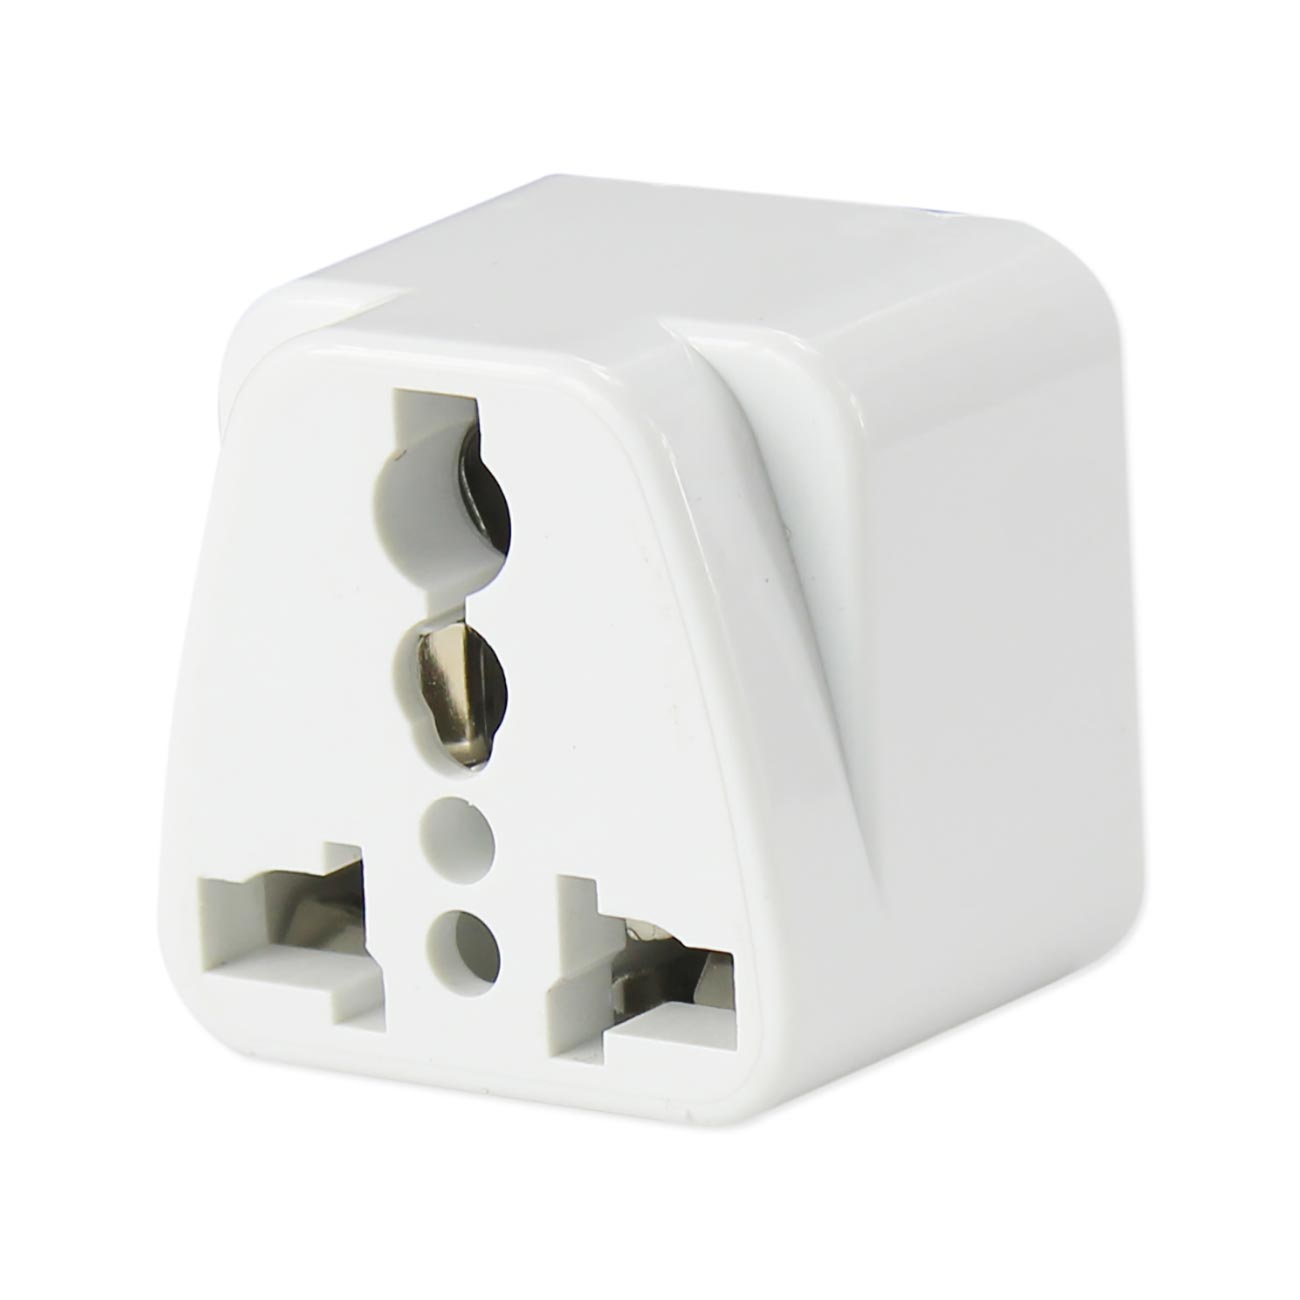 Universal Europe Eu / Uk / Au To Us Travel Plug Power Adapter Converter In White